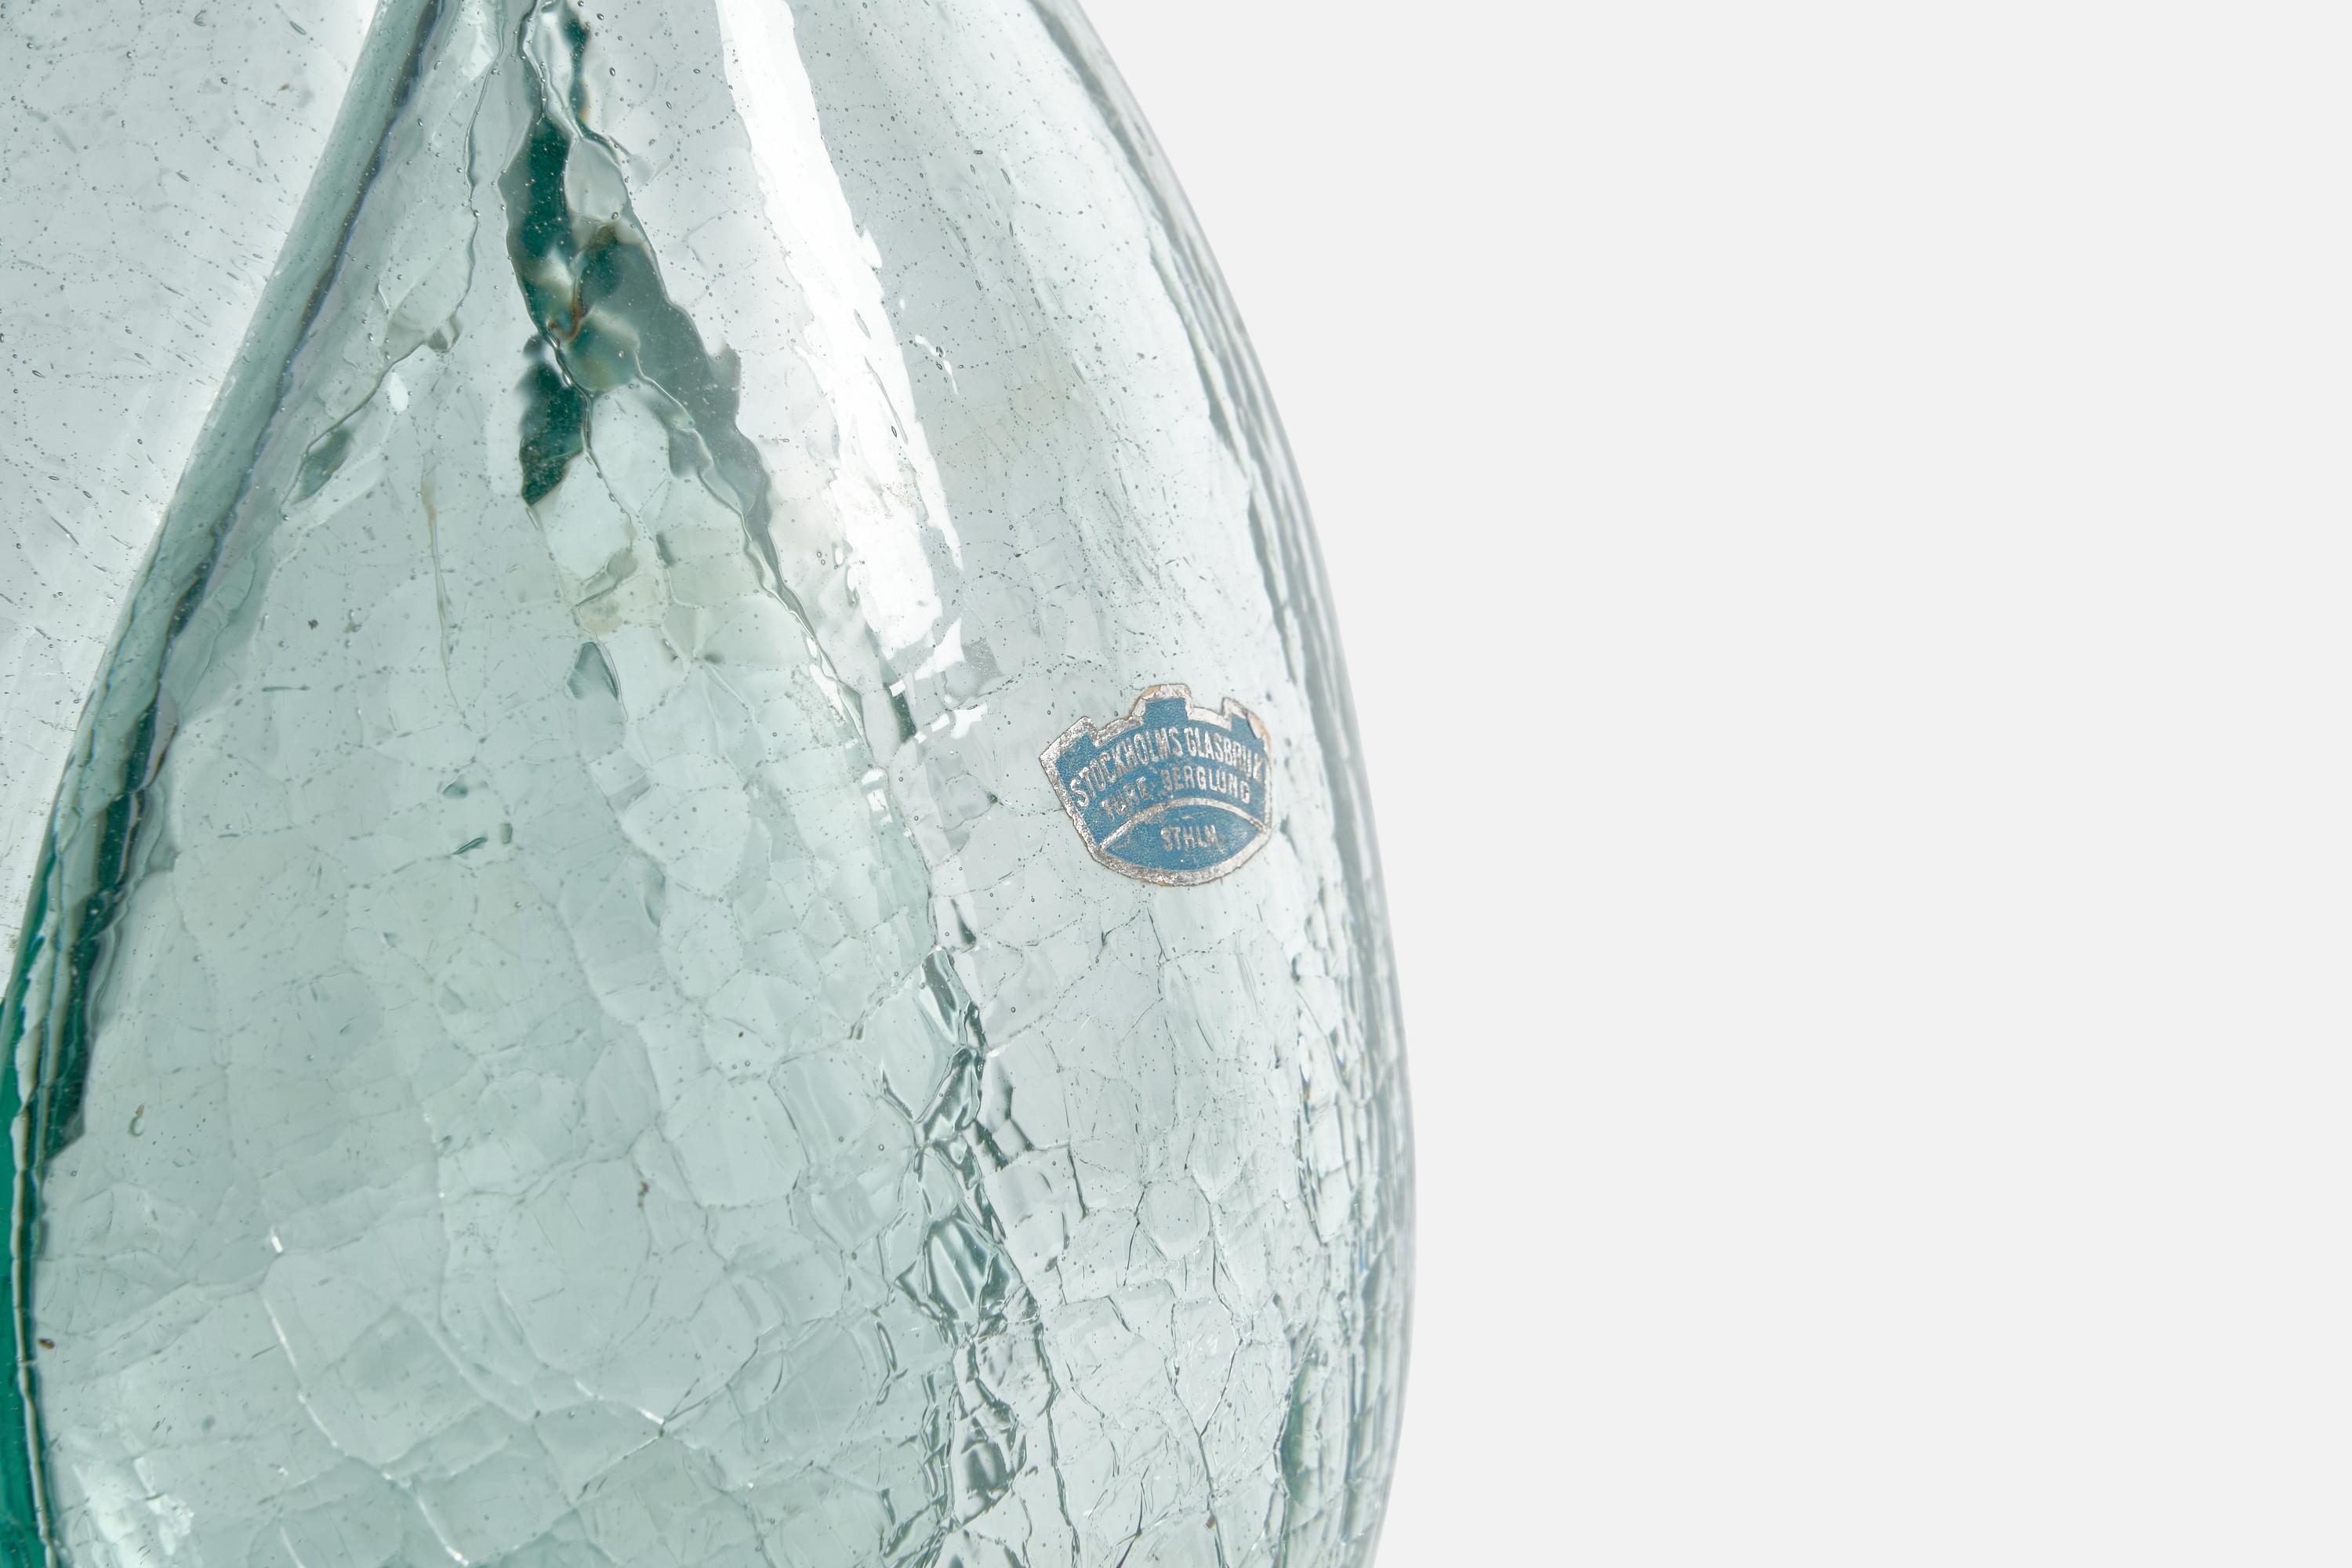 Swedish Ture Berglund, Bottle, Glass, Sweden, 1940s For Sale